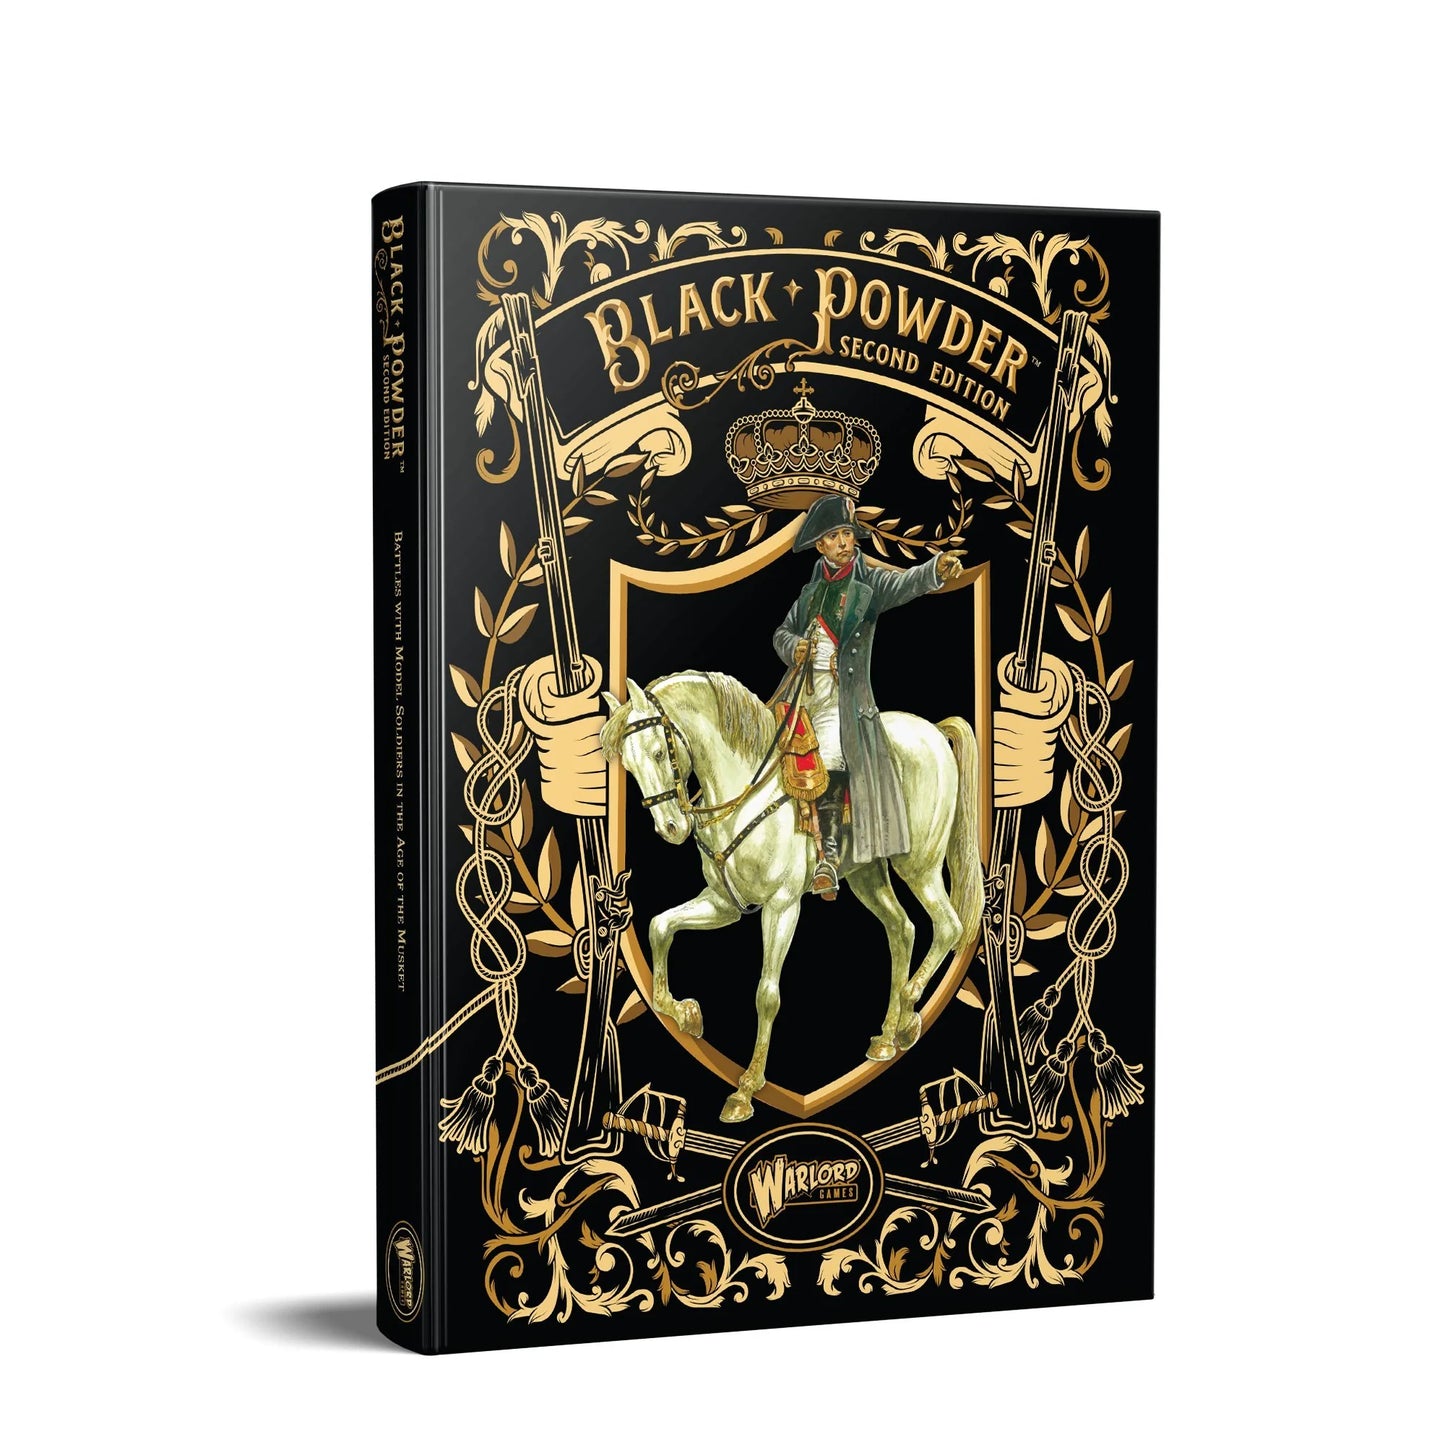 Black Powder Second Edition